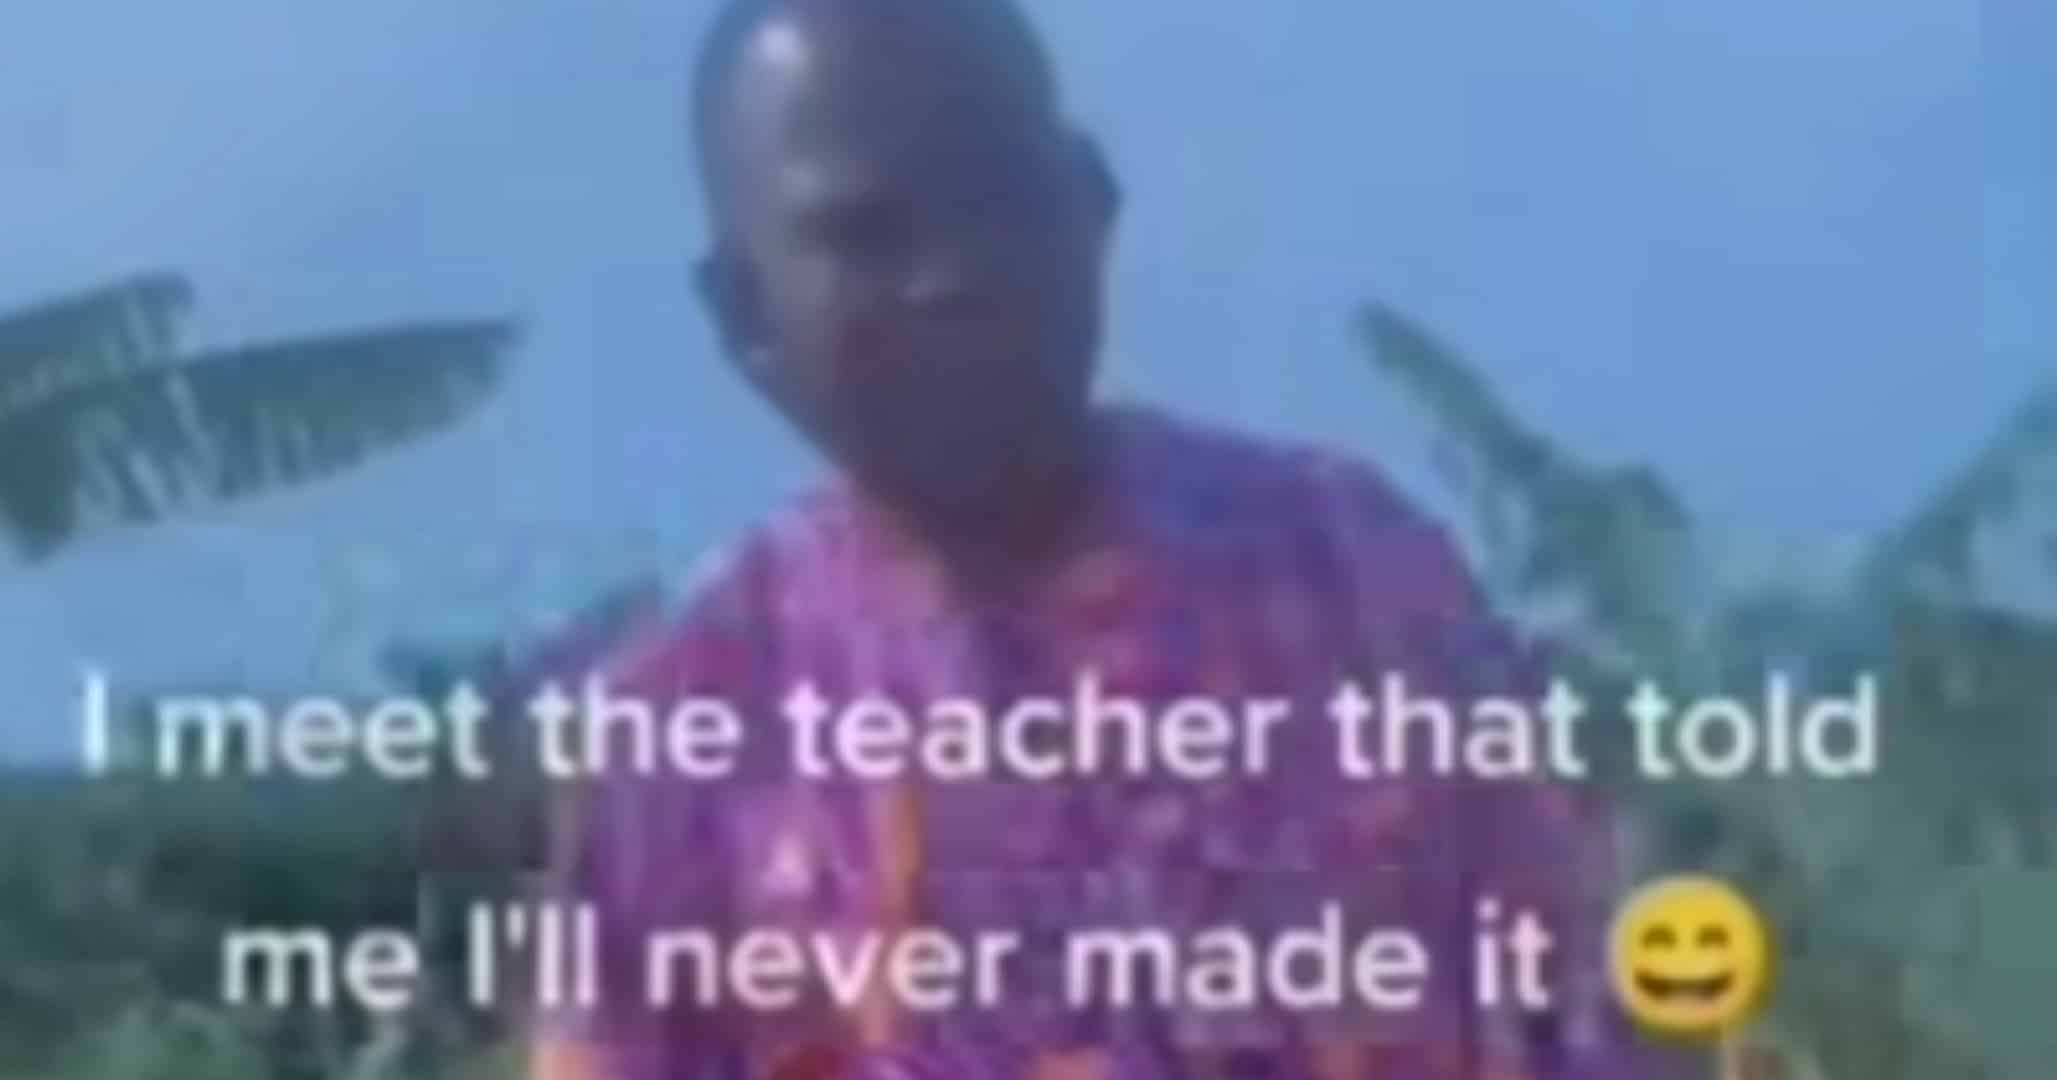 "You go trek tire" – Man in car mocks former teacher that told him he can never make it (Video)